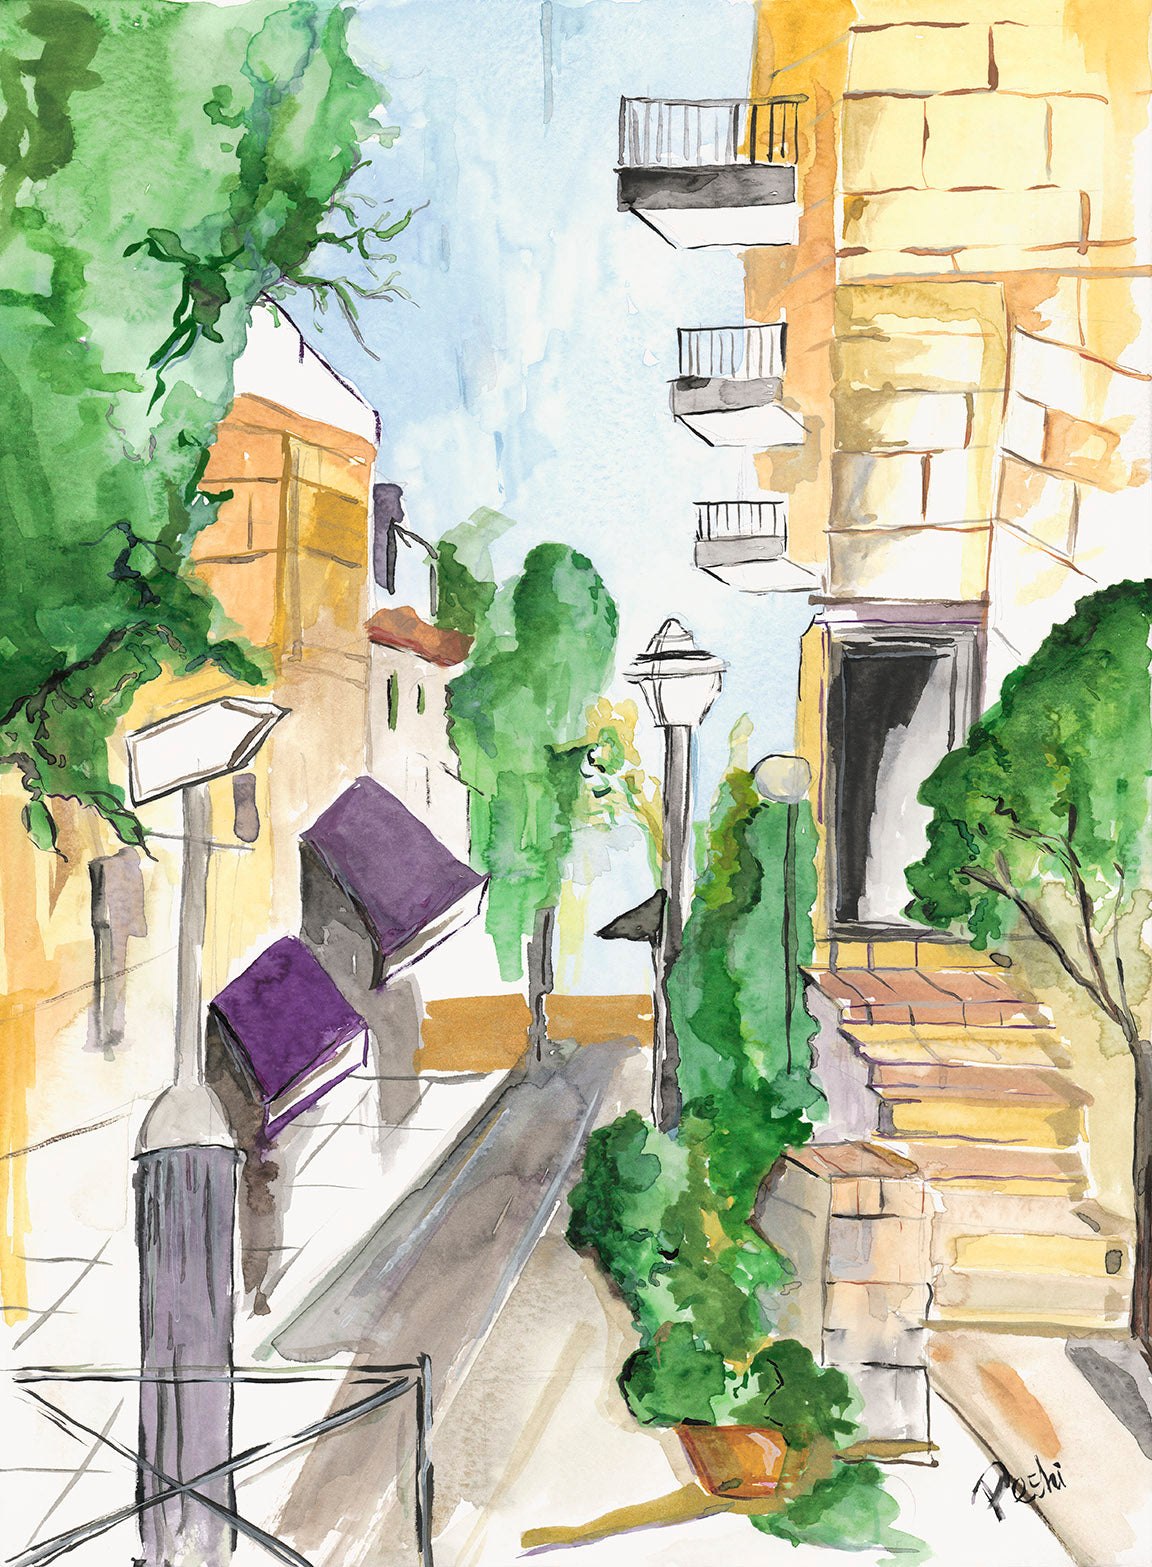 Ben Yehuda Street, Jerusalem | Watercolor & Prints